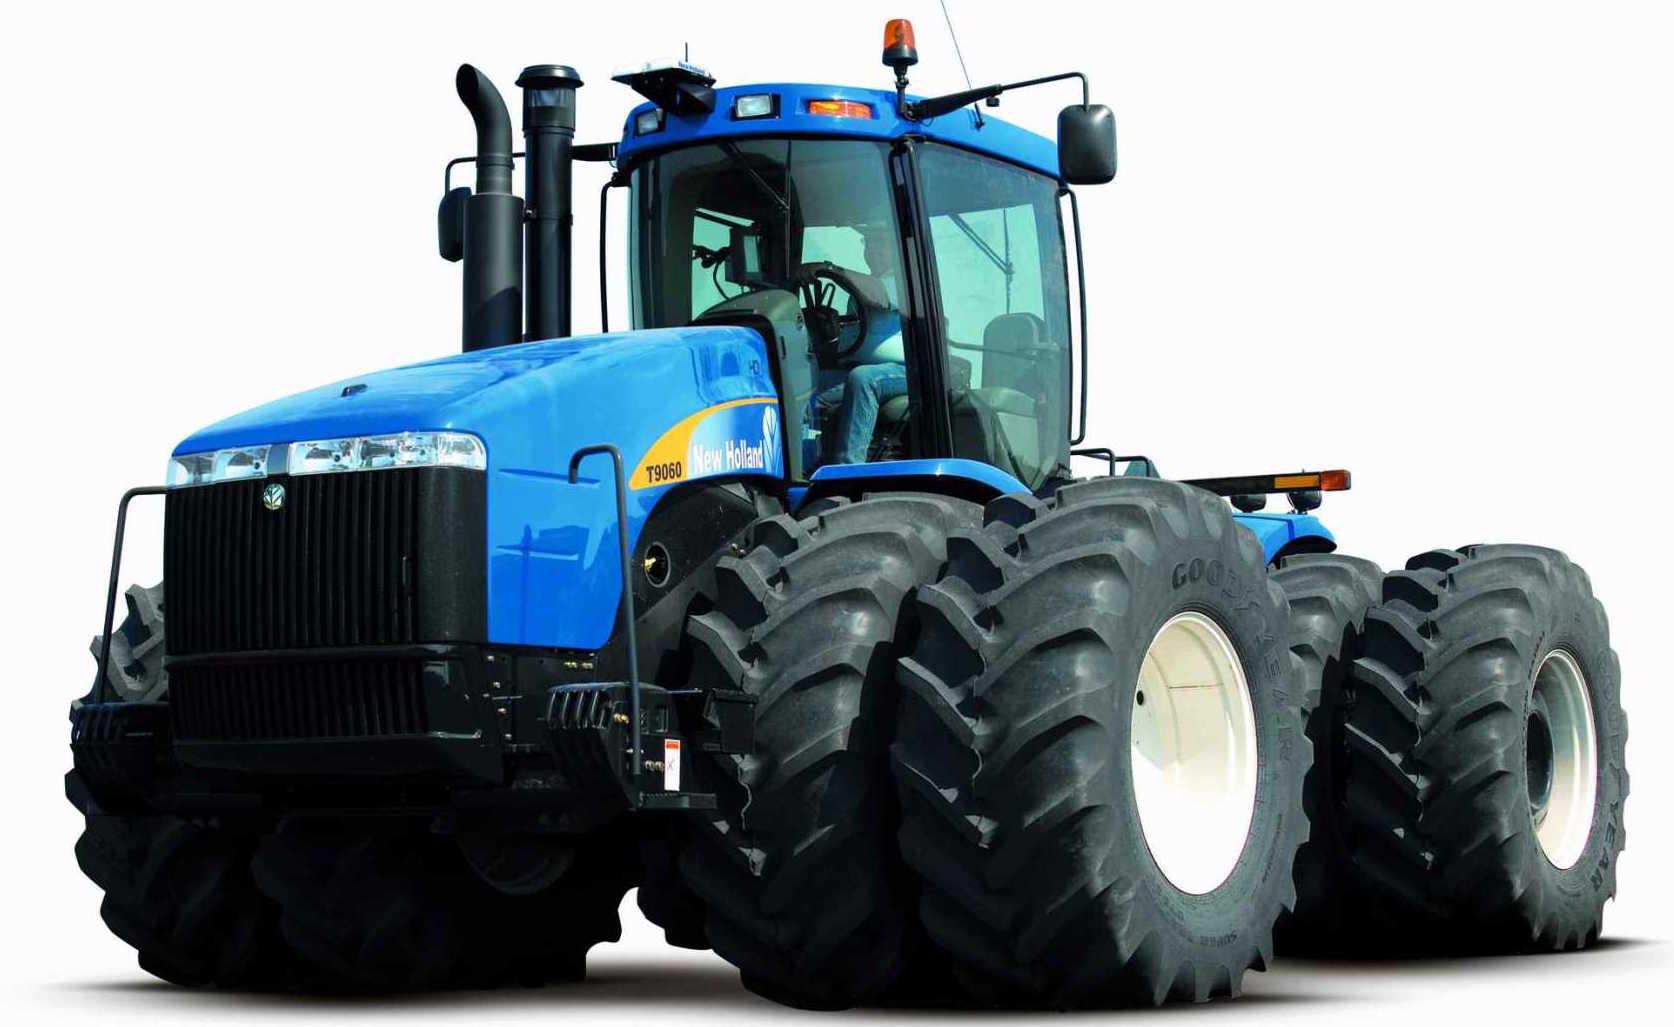 Yüksek kaliteli ayarlama fil New Holland Tractor TJ 425 14.9 430hp